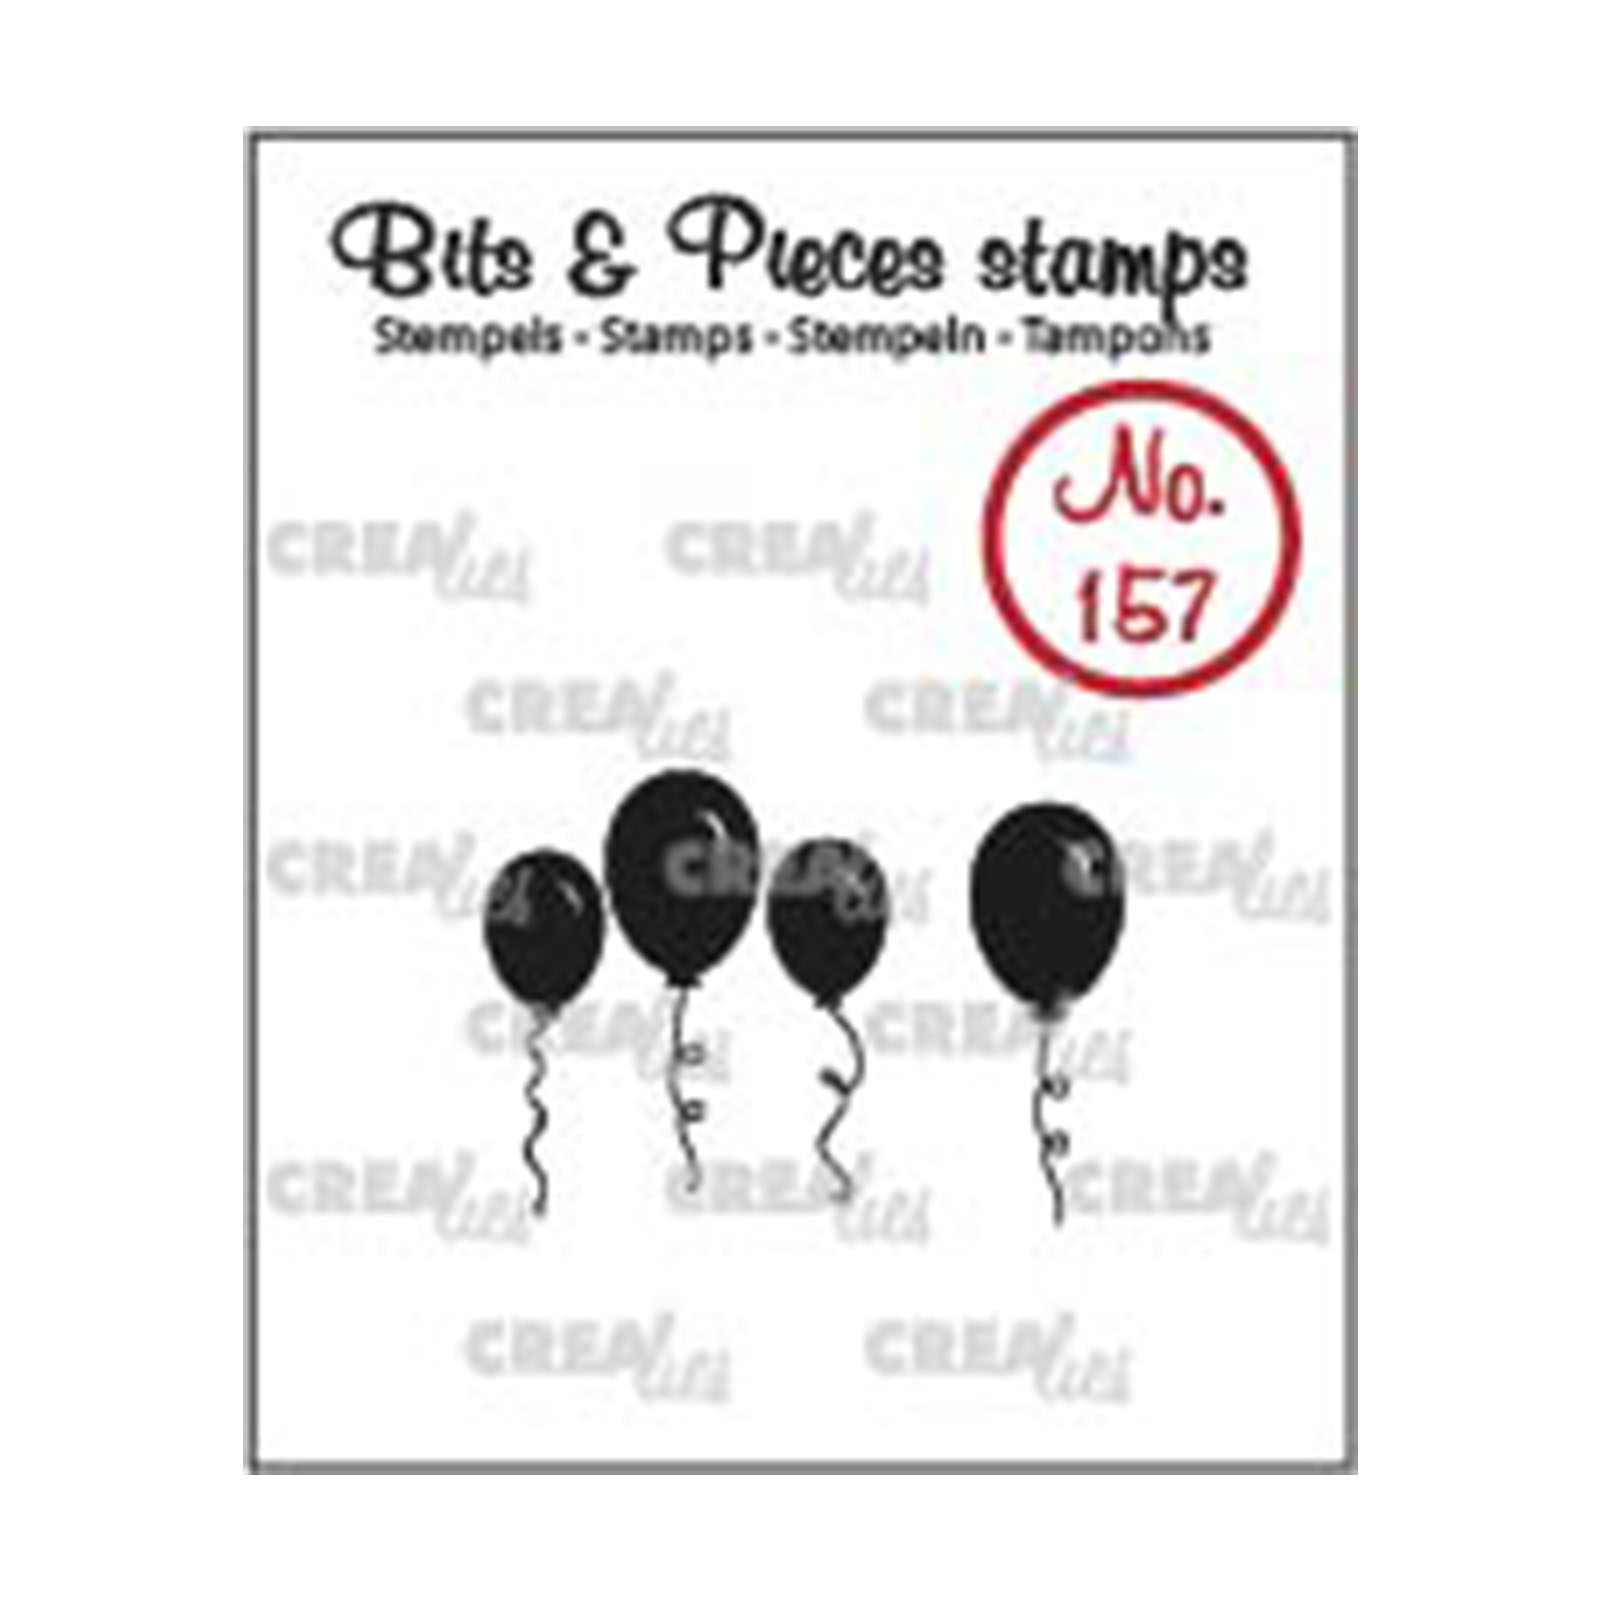 Crealies • Bits & Pieces stamp No.157 Balloons closed